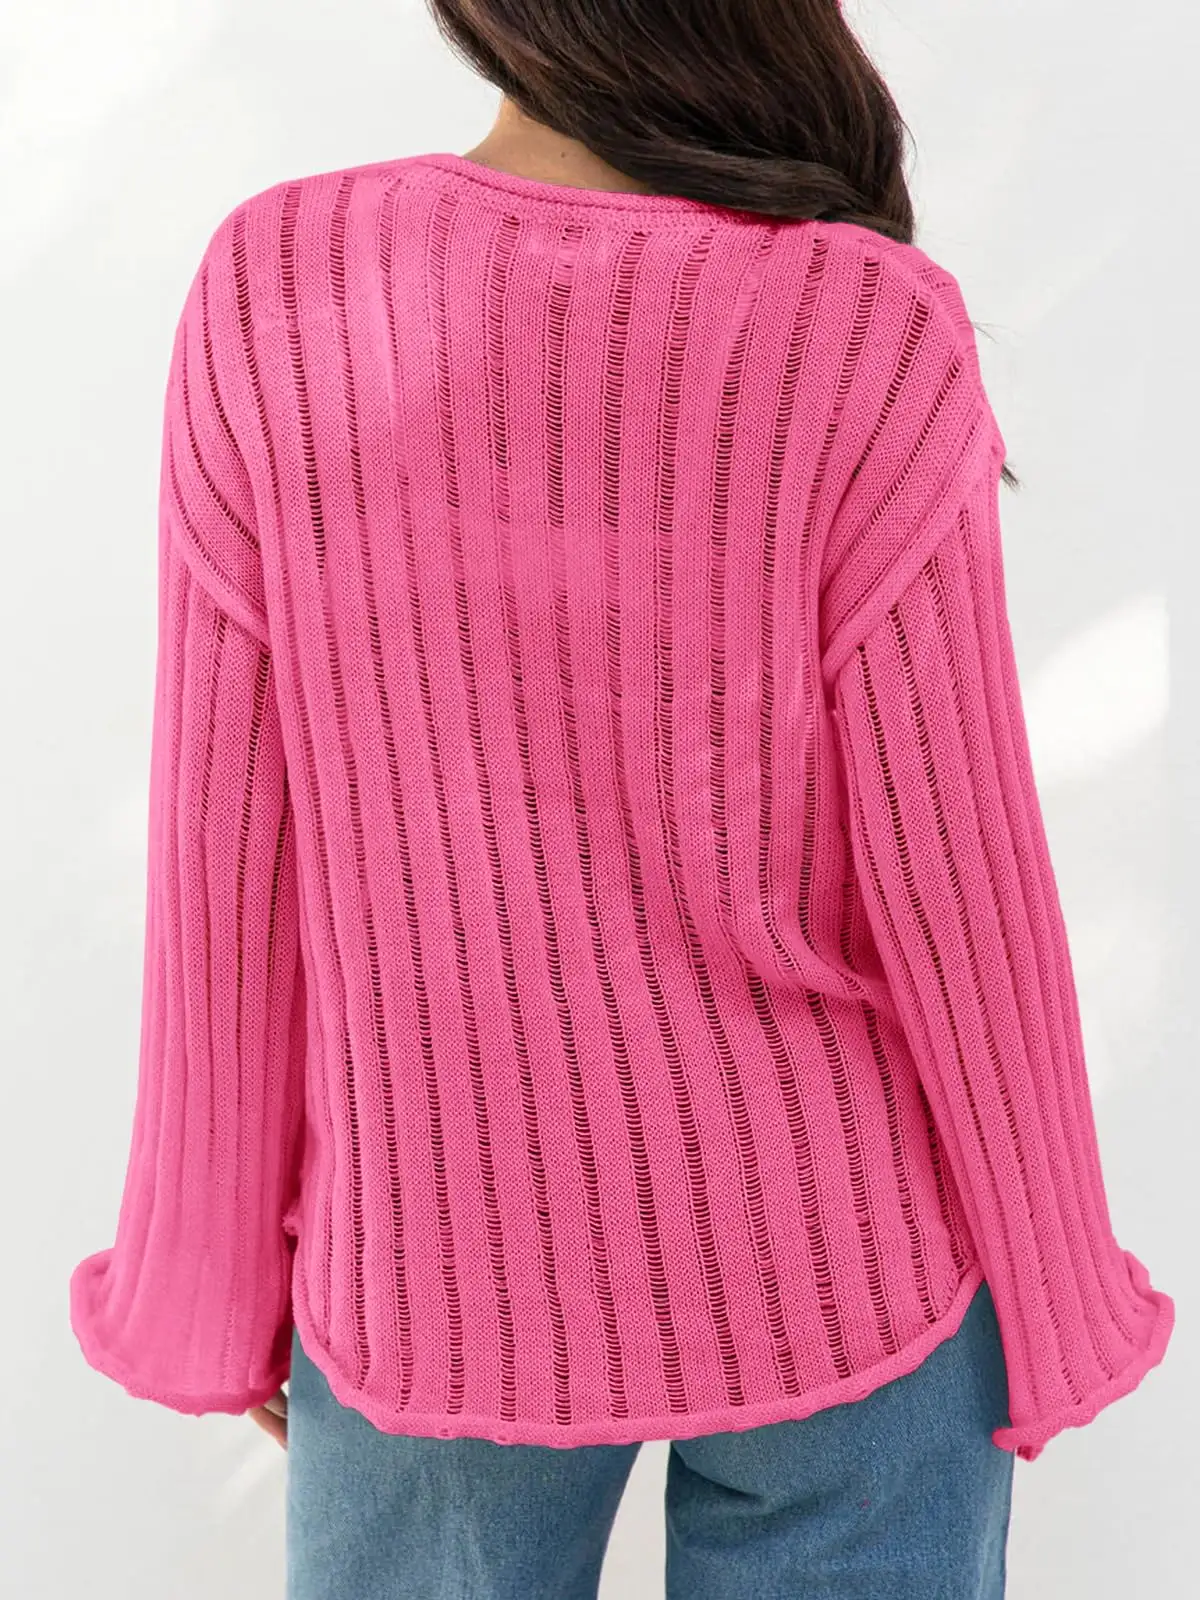 Sweter lengan panjang wanita, atasan Pullover rajut leher tinggi, kemeja blus Crochet ringan kasual musim semi 2024